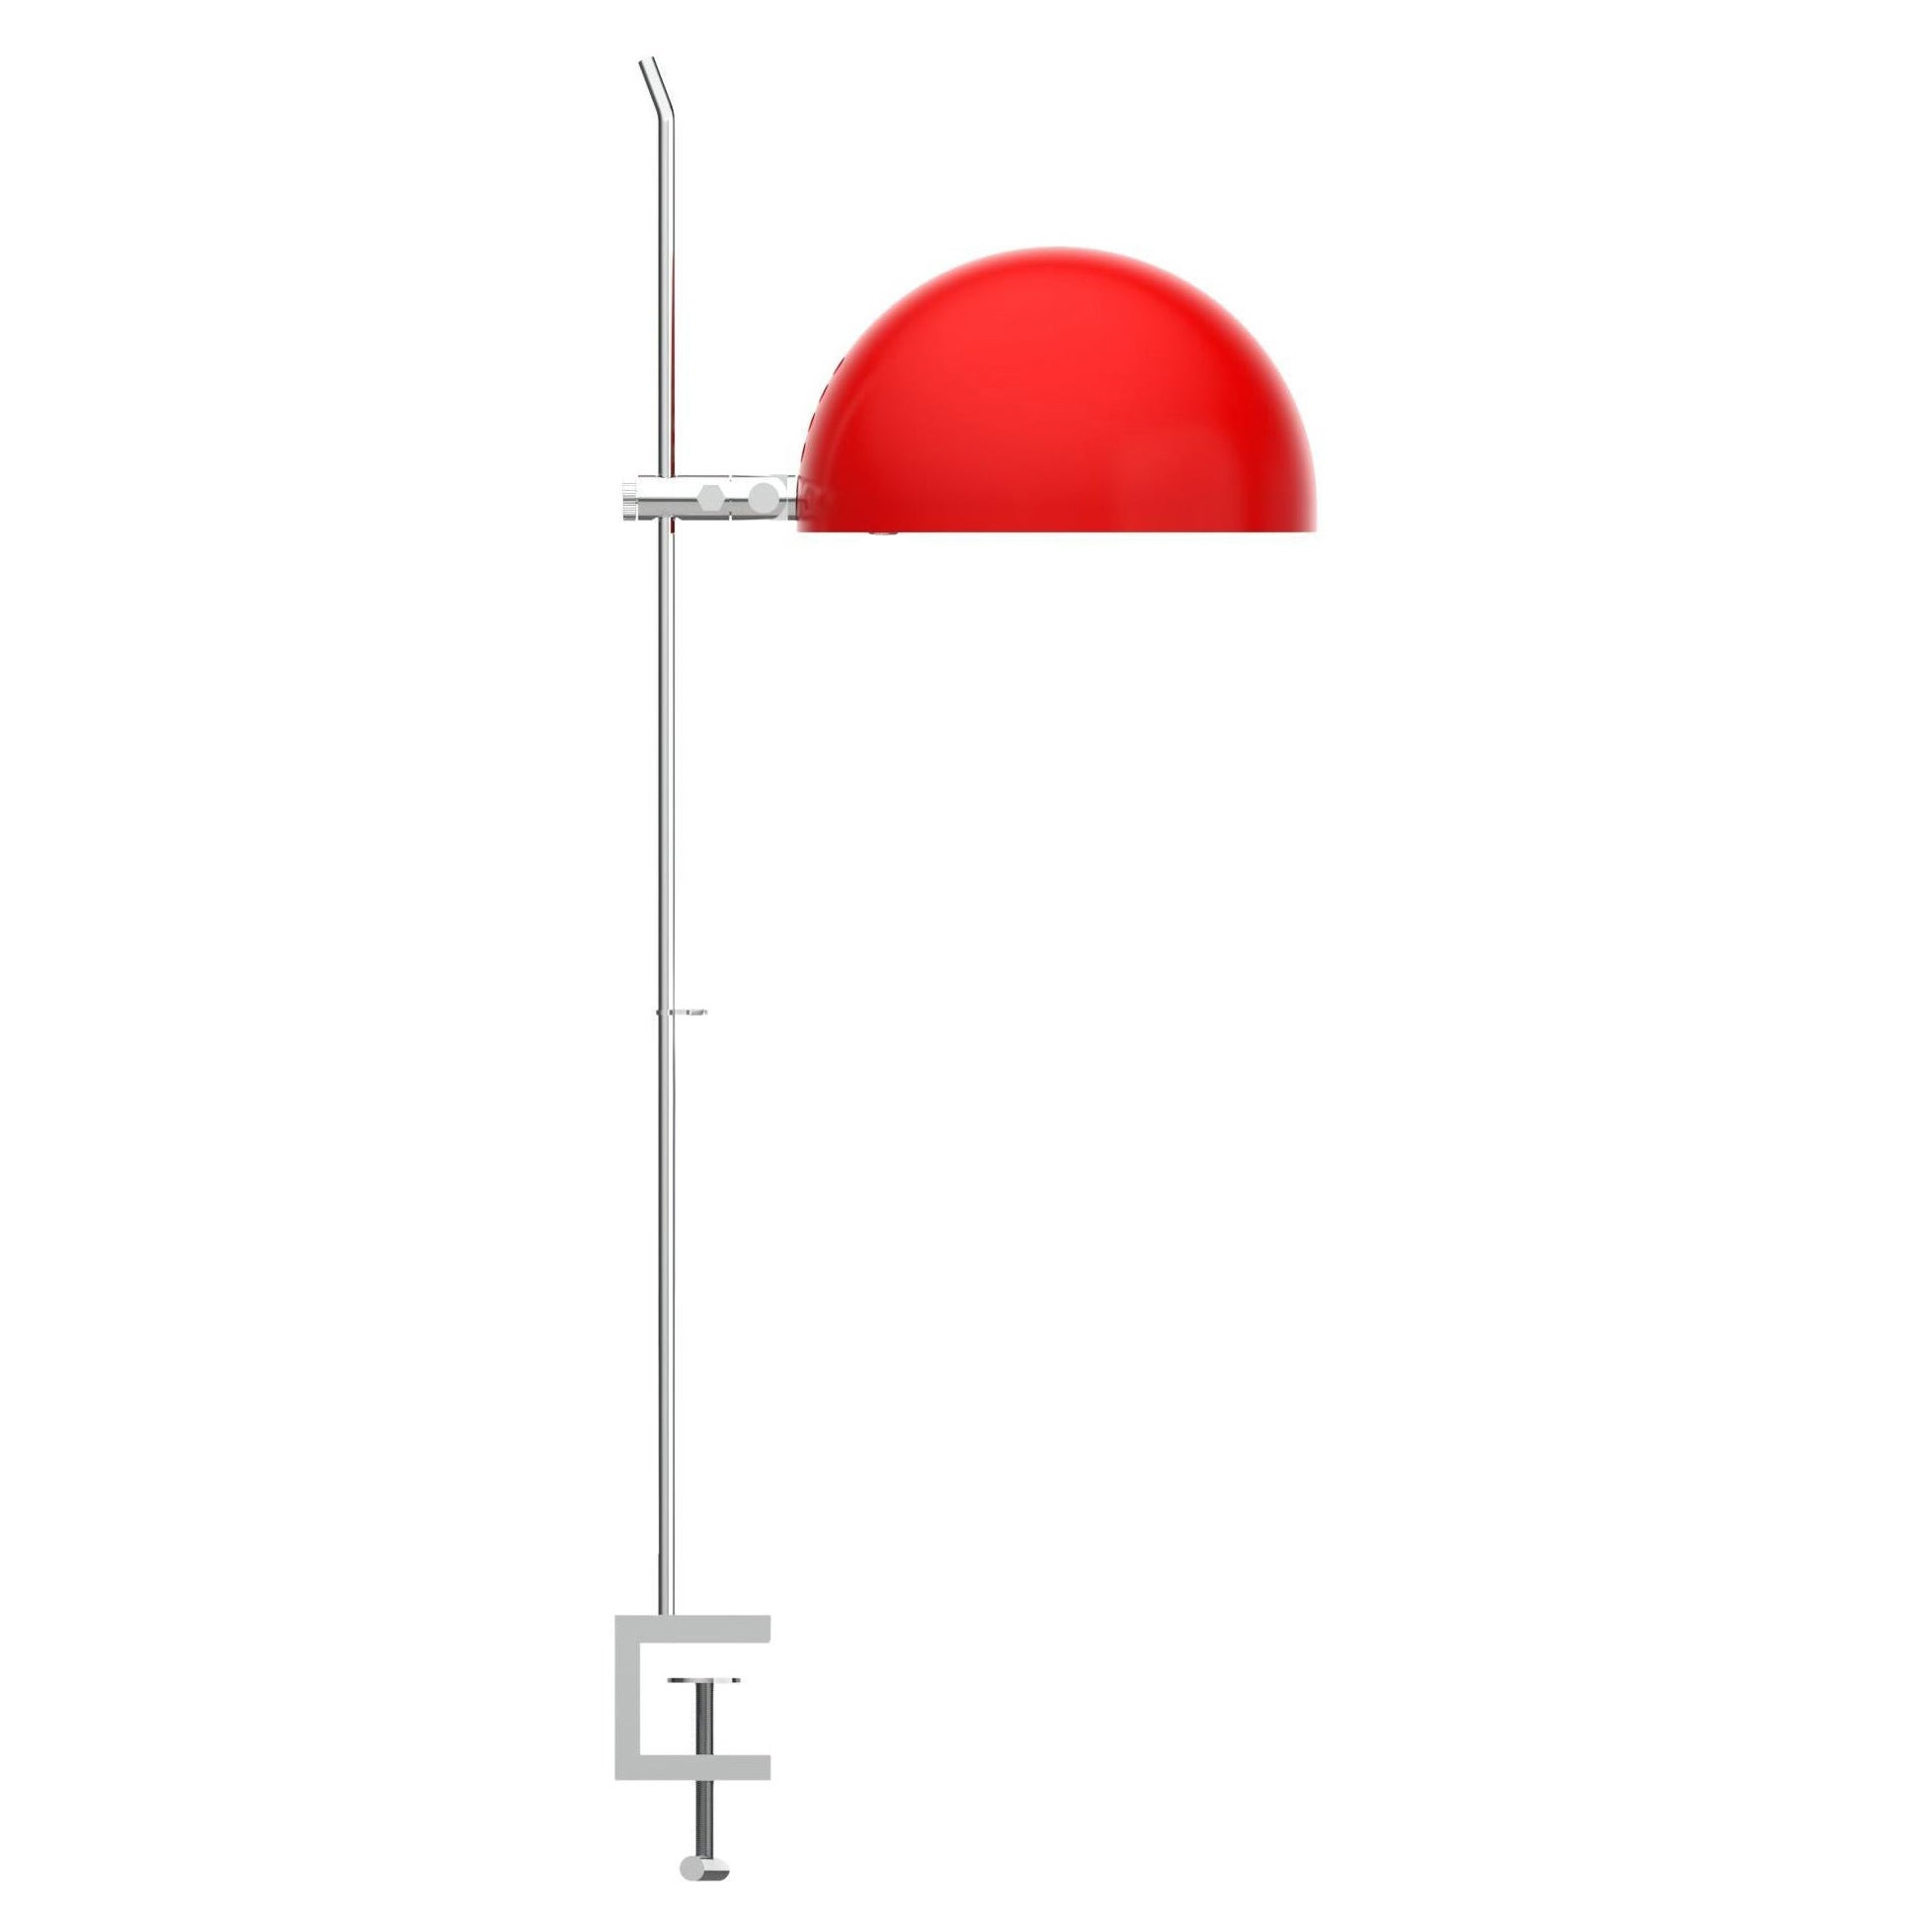 Alain Richard 'A22F' Task Lamp in Red for Disderot For Sale